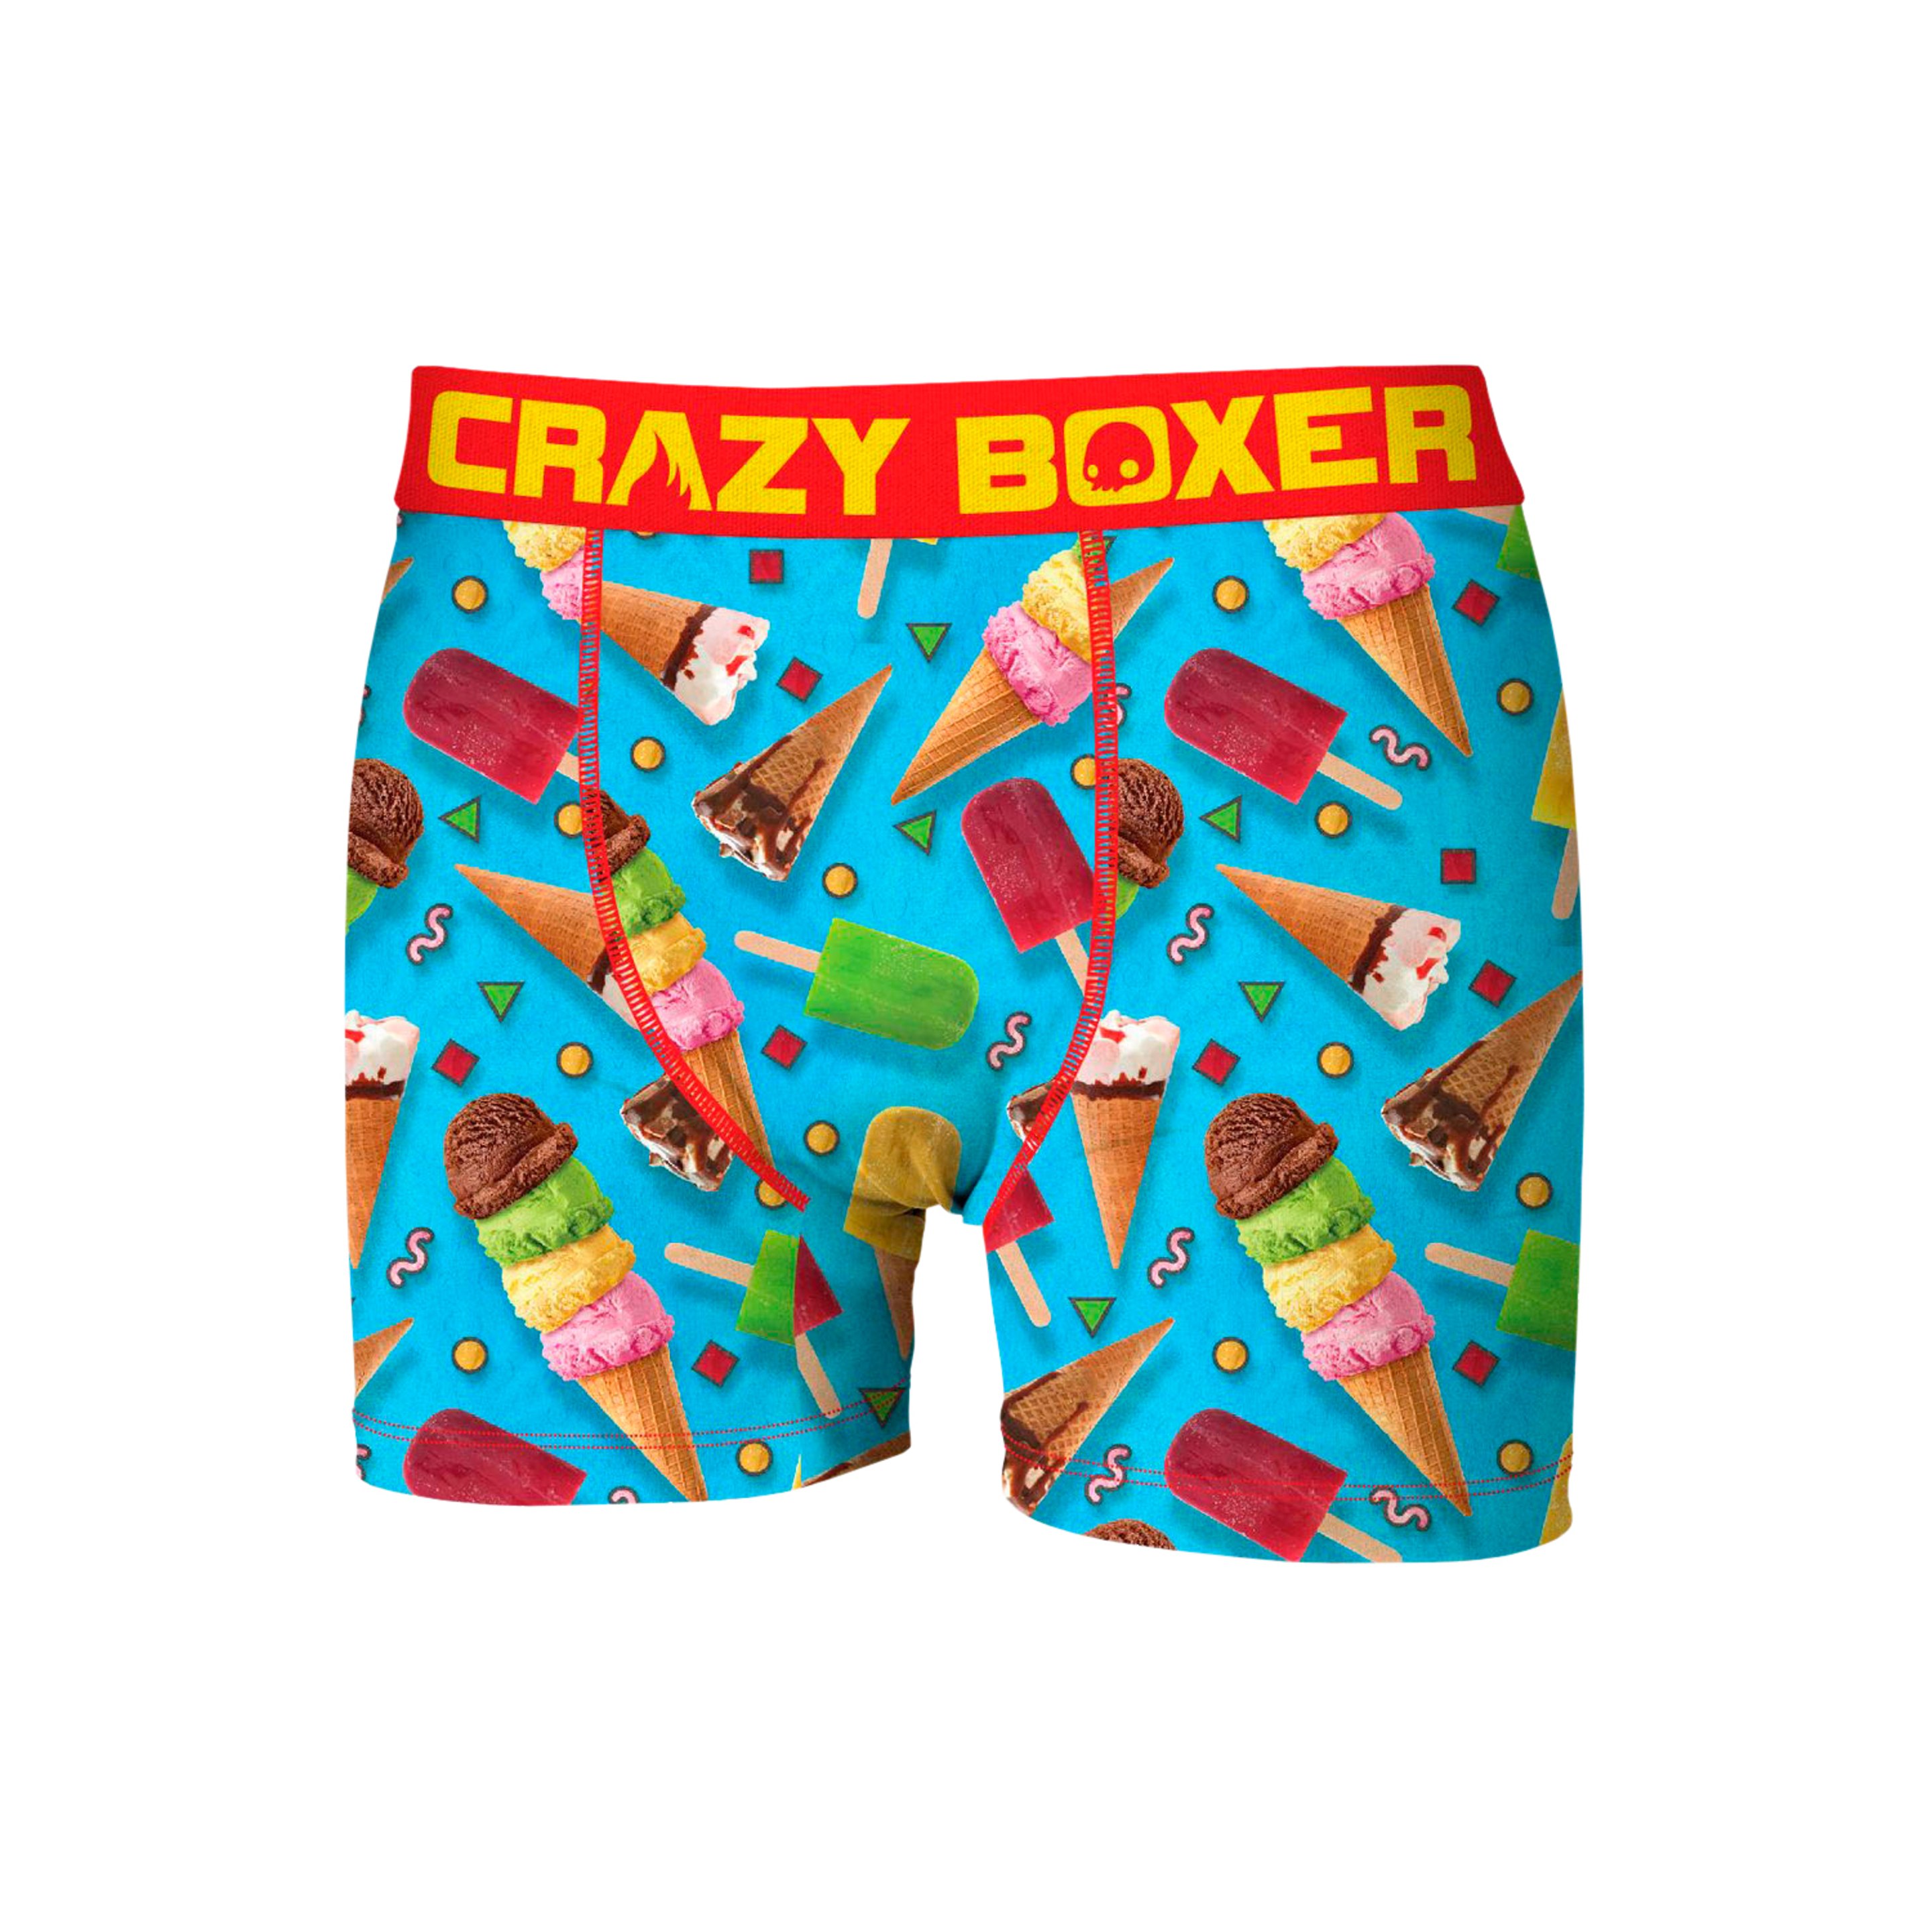 Calzoncillo Helados Crazy Boxer - Multicolor  MKP